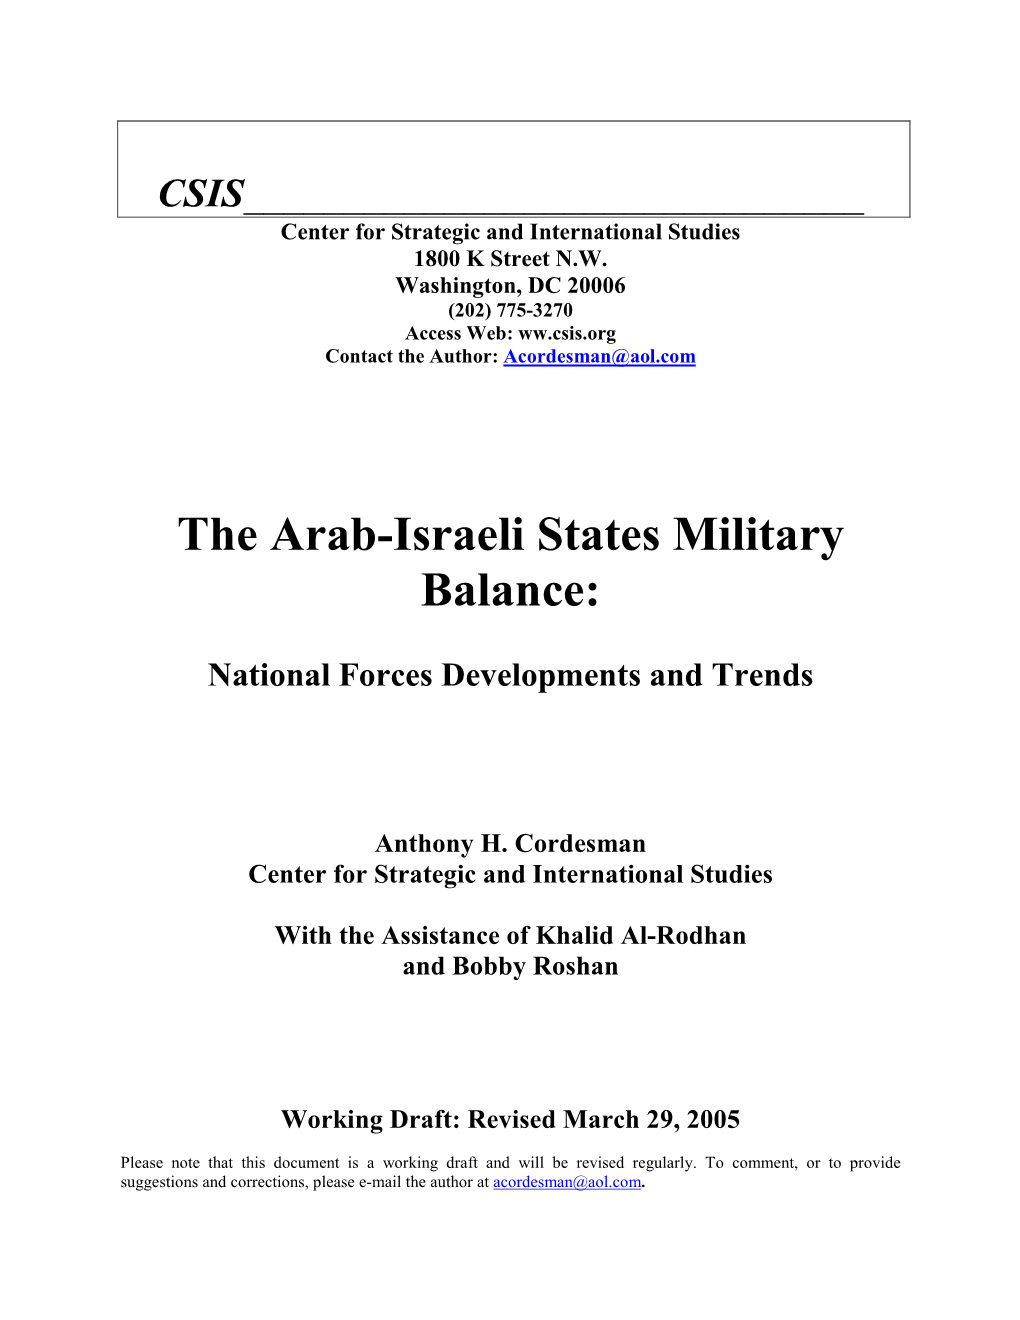 The Arab-Israeli States Military Balance:National Forces